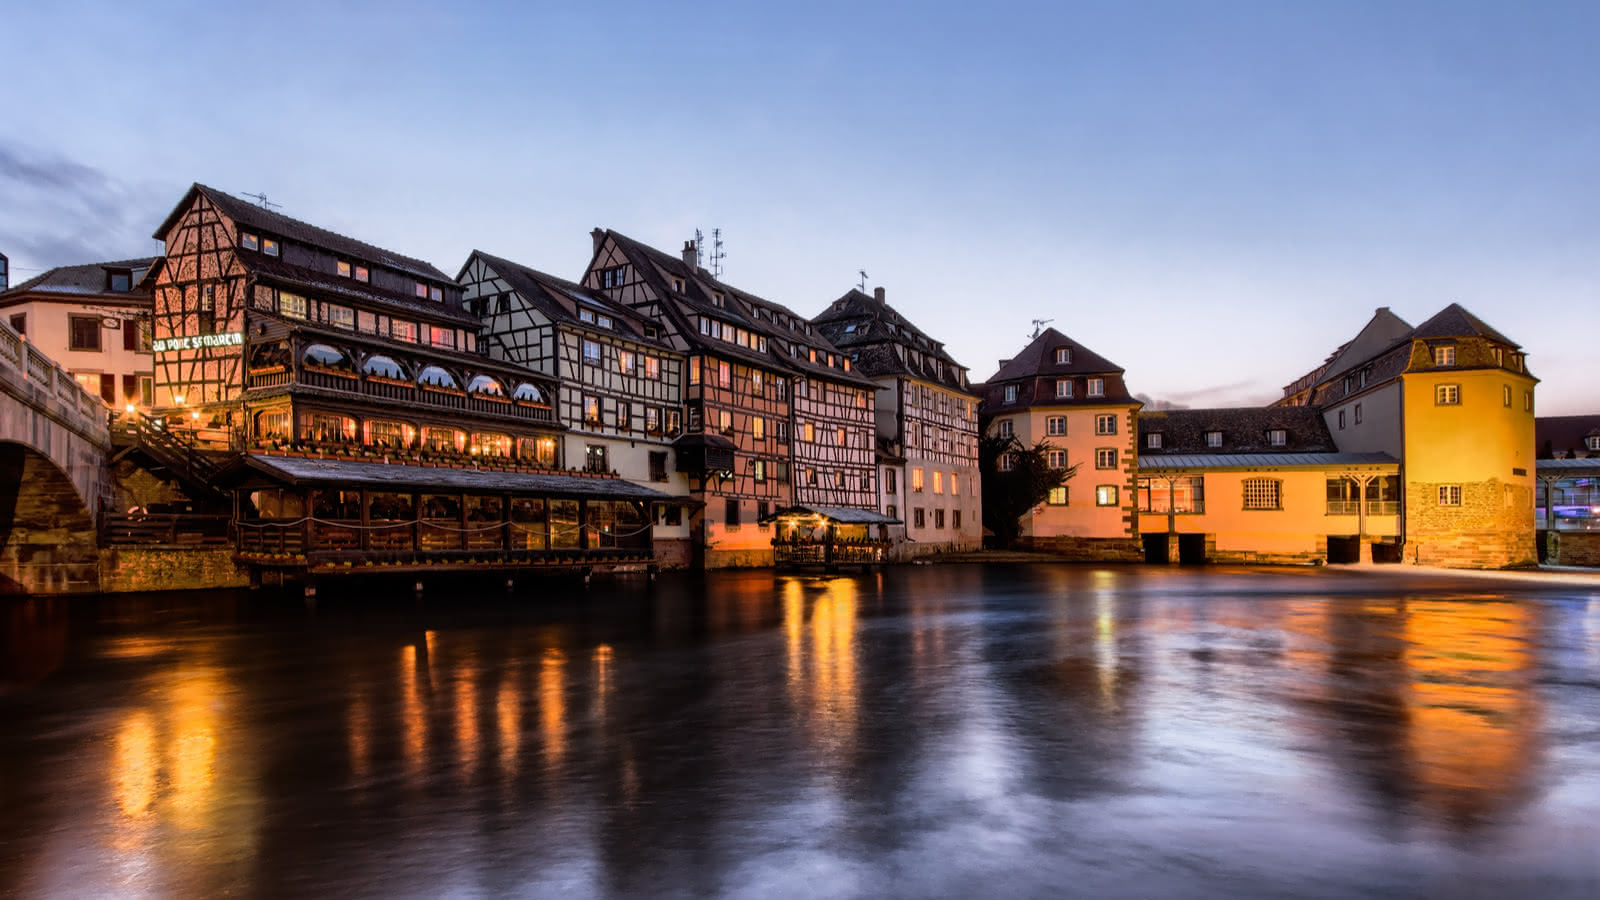 Maisons à colombages - Petite France - Strasbourg